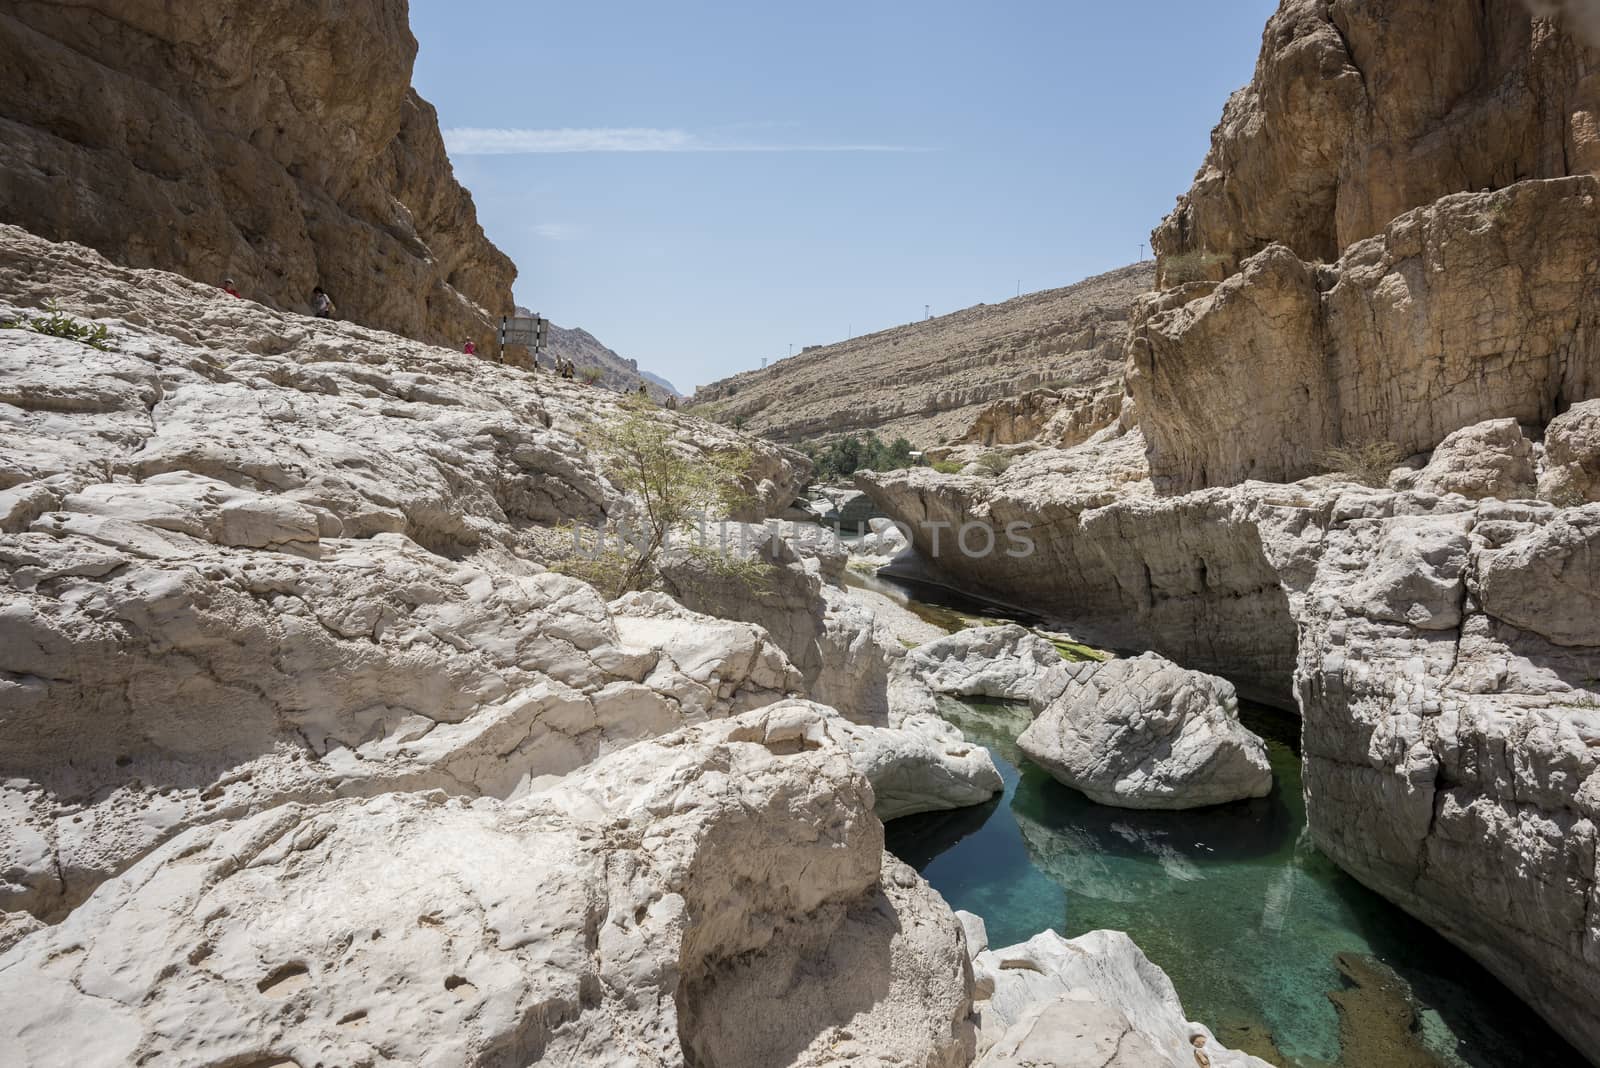 River and pool in the canyon of Wadi Bani Khalid, Oman by GABIS